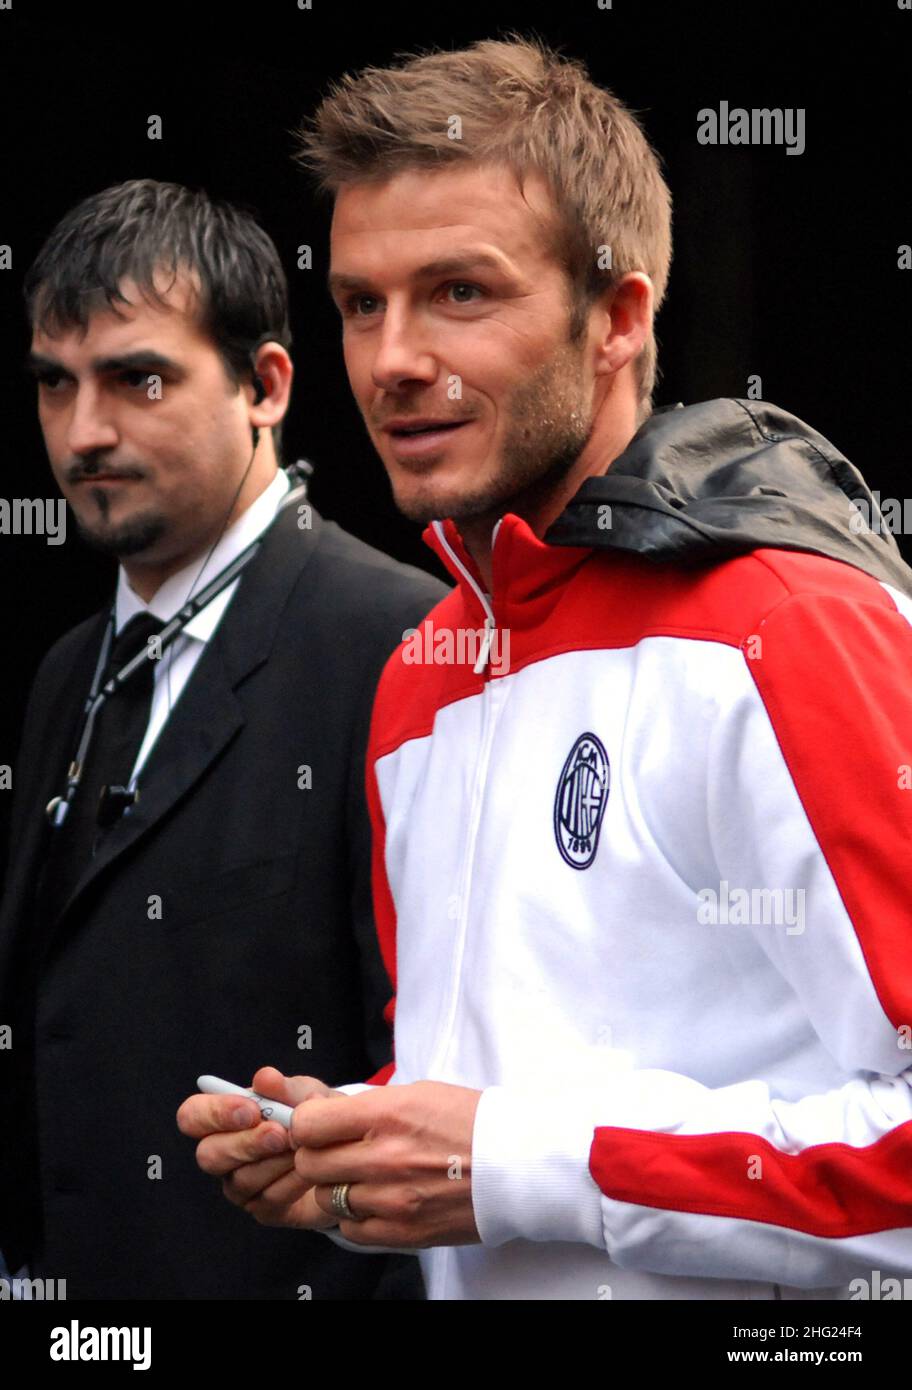 David Beckham at the Adidas Store in Milan to present new Predator  Powerswerve Stock Photo - Alamy